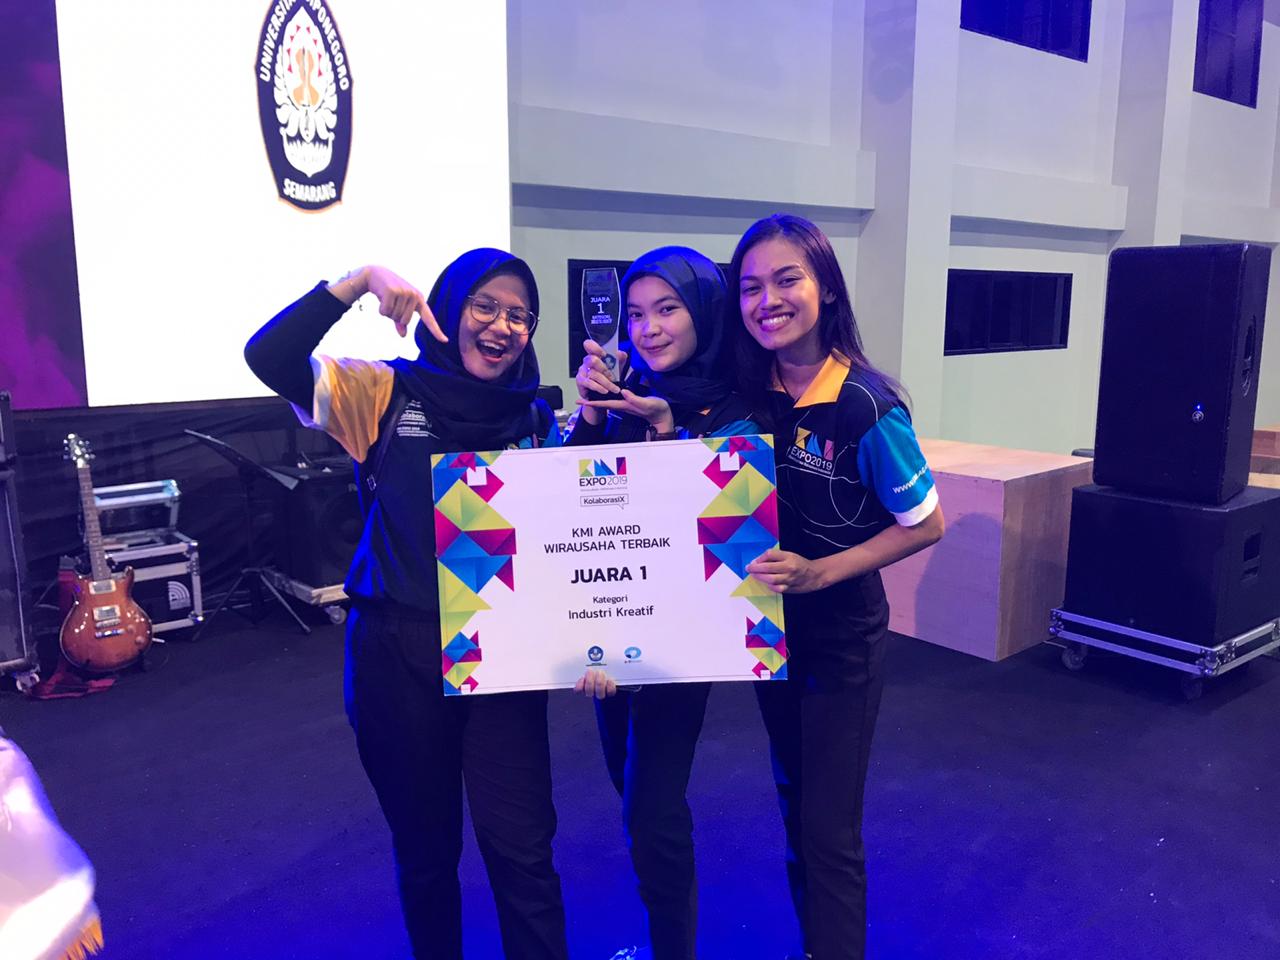 Mahasiswa UM Boyong Juara 1 Kategori Industri Kreatif KMI Award 2019